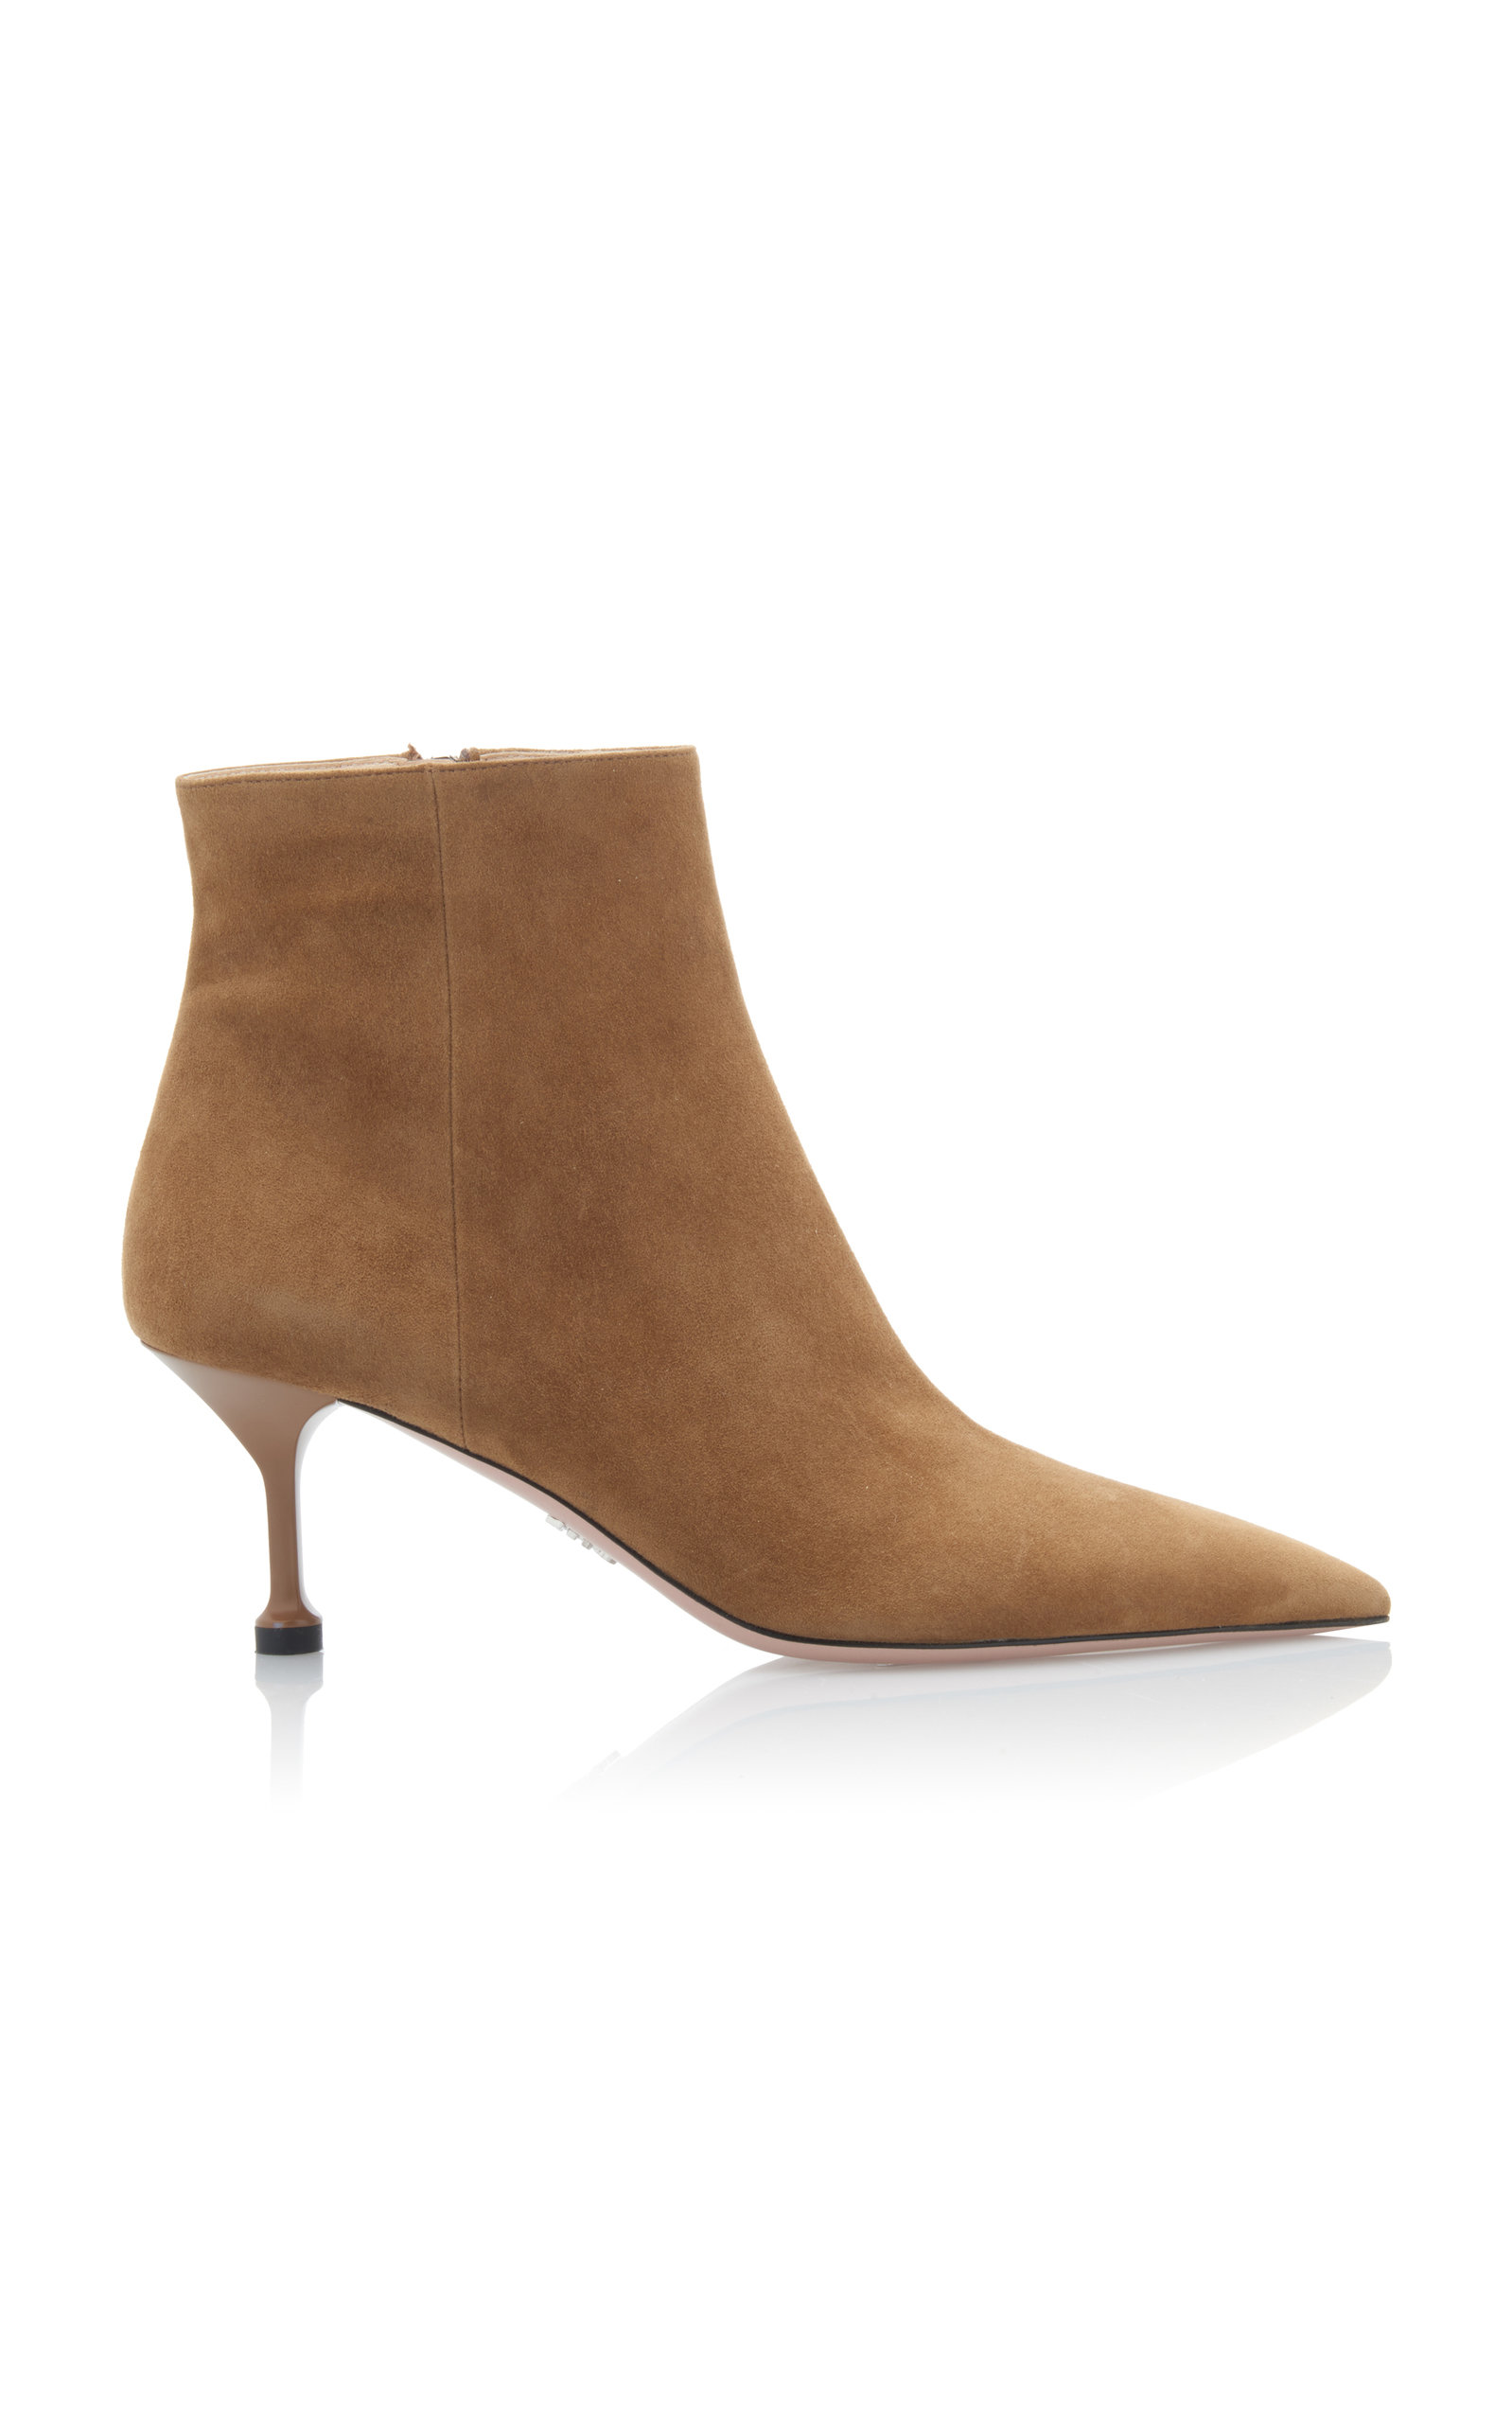 Prada - Women's Suede Ankle Boots - Brown - Moda Operandi | Smart Closet